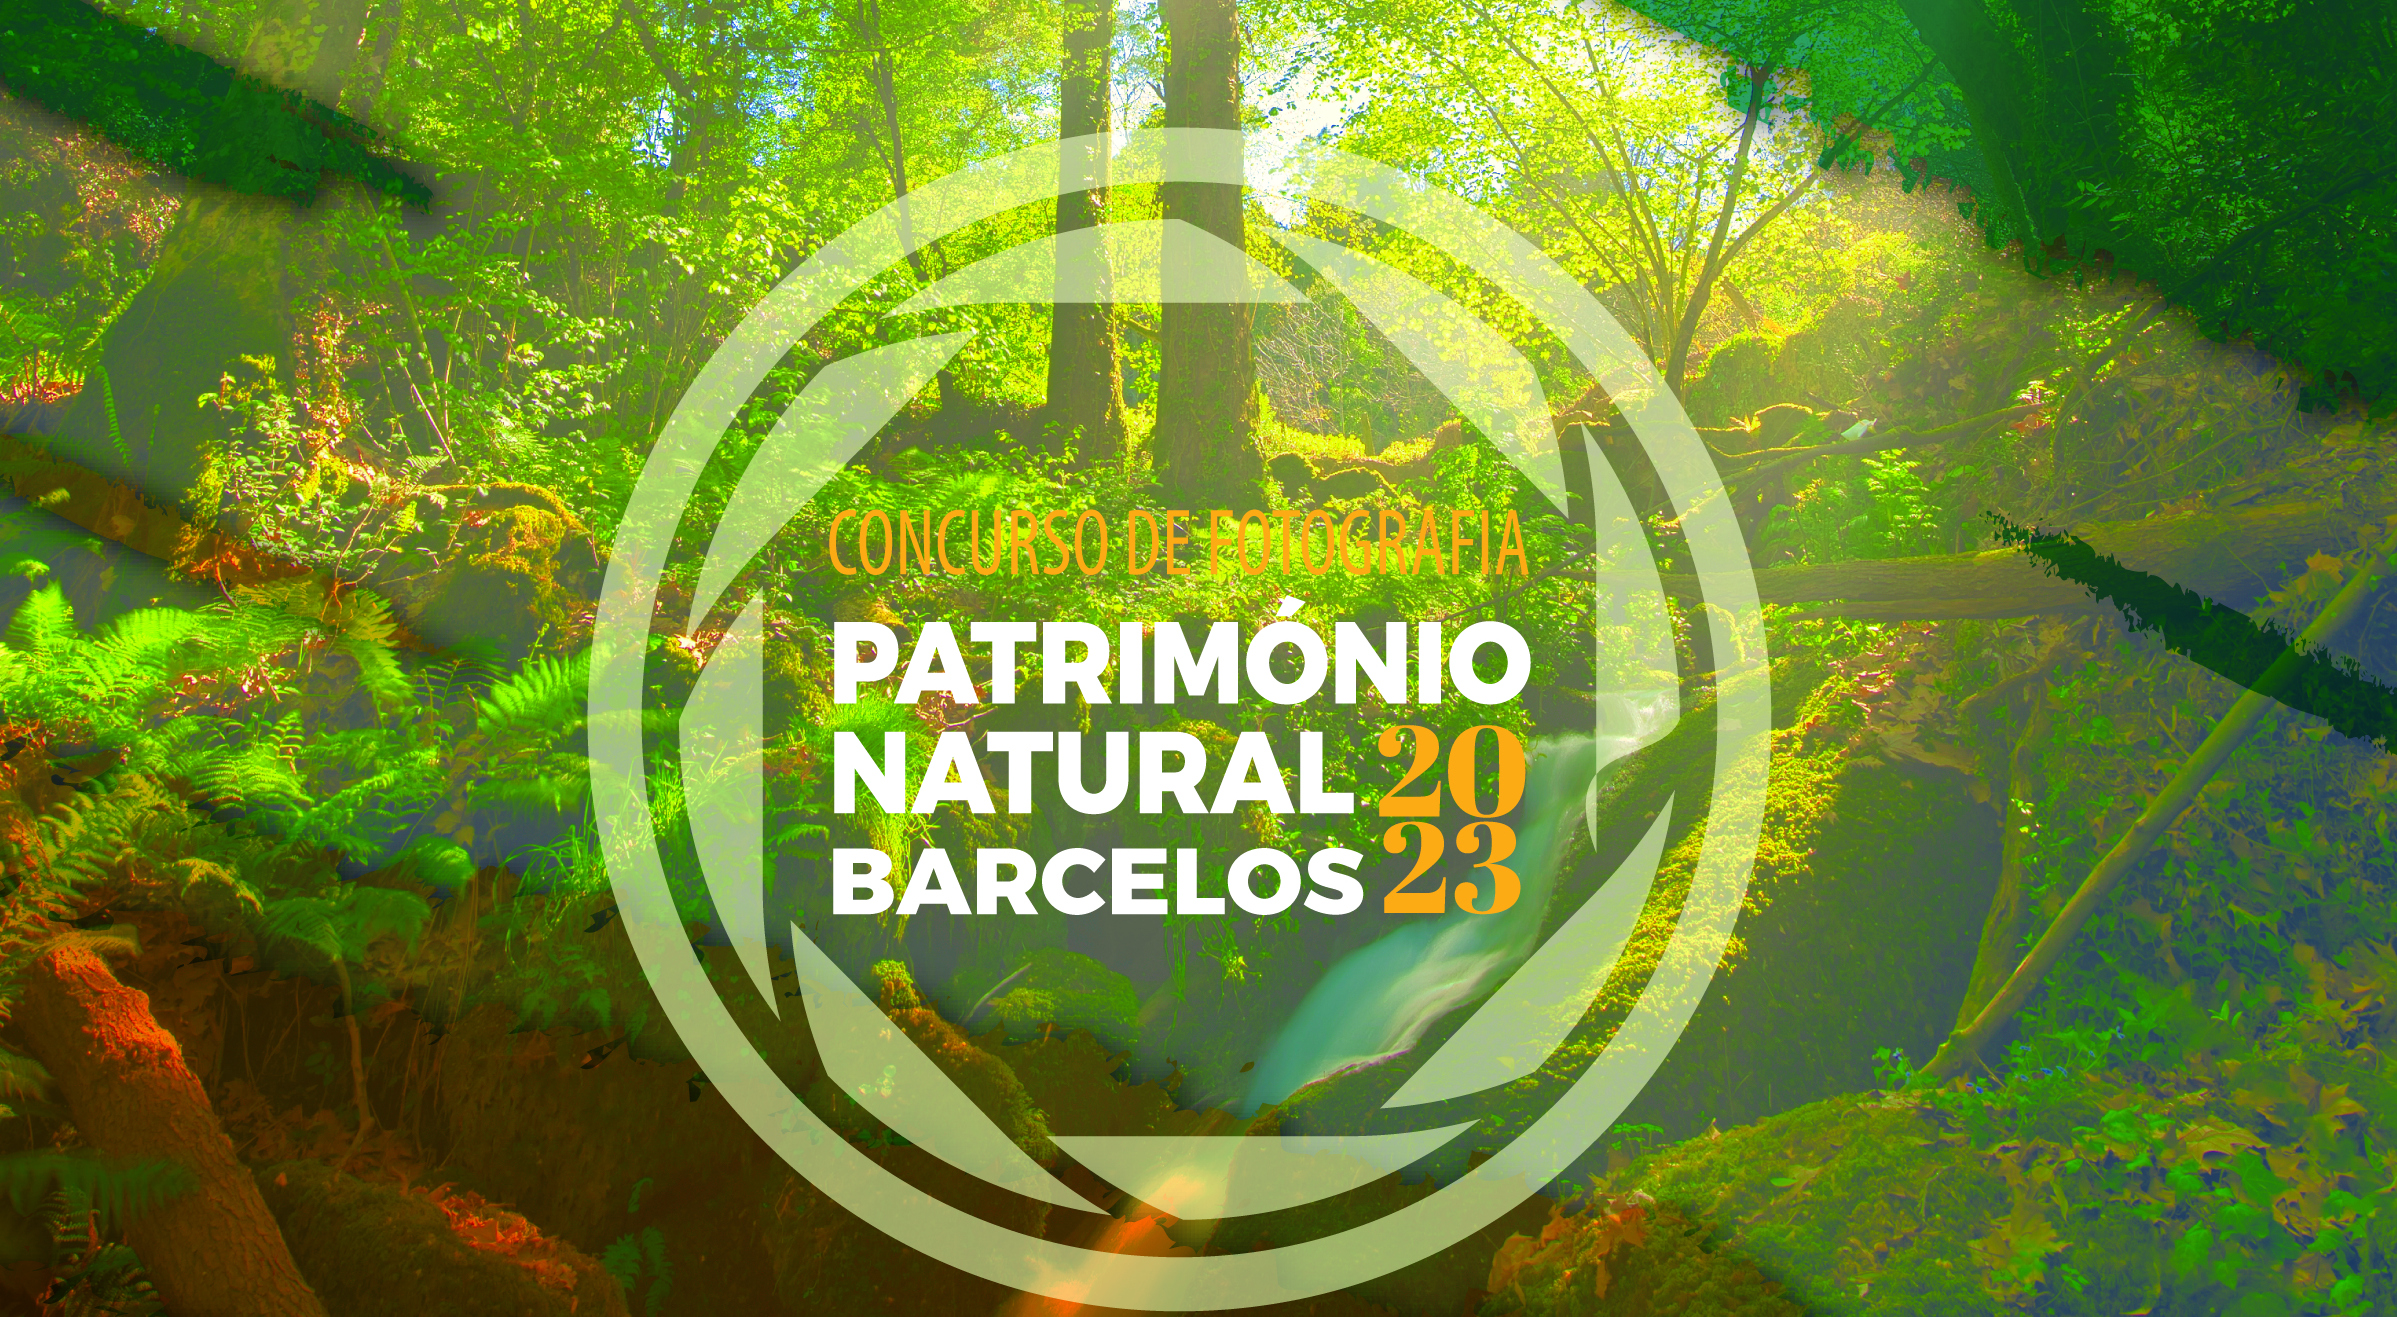 Concurso de Fotografia “Património Natural de Barcelos” 2023